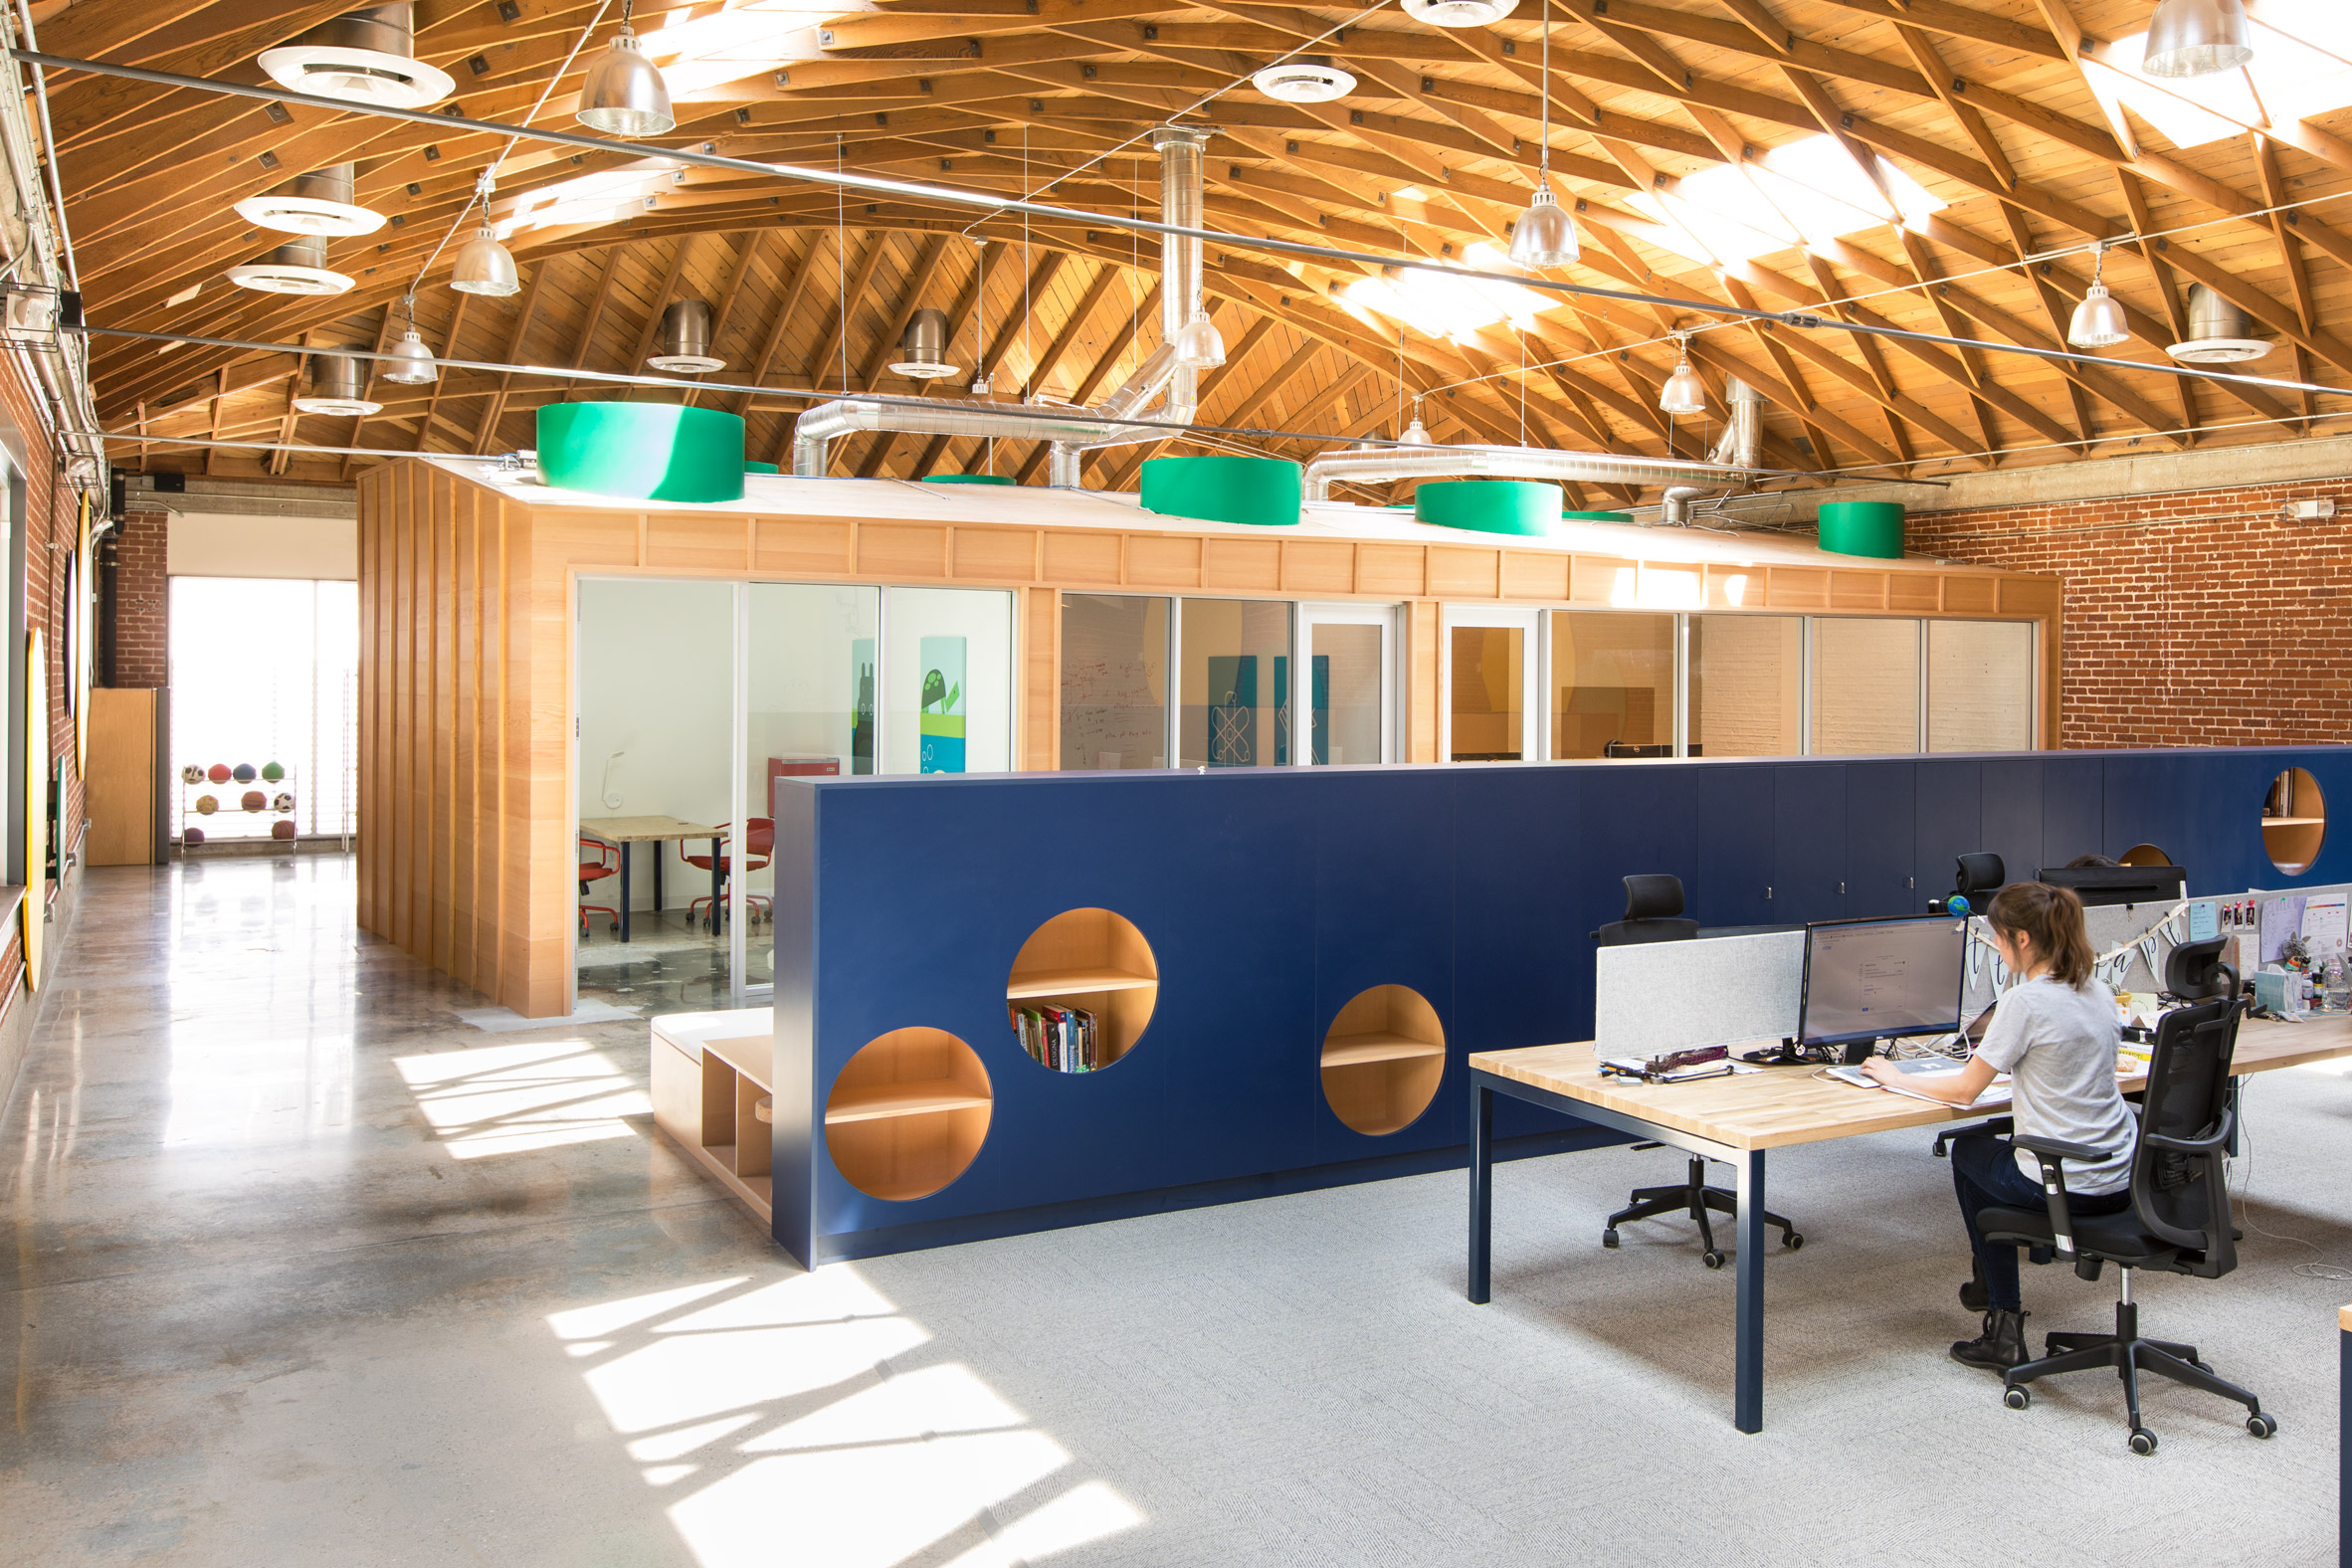 Design, Bitches overhauls LA education centre 9 Dots with plywood built-ins